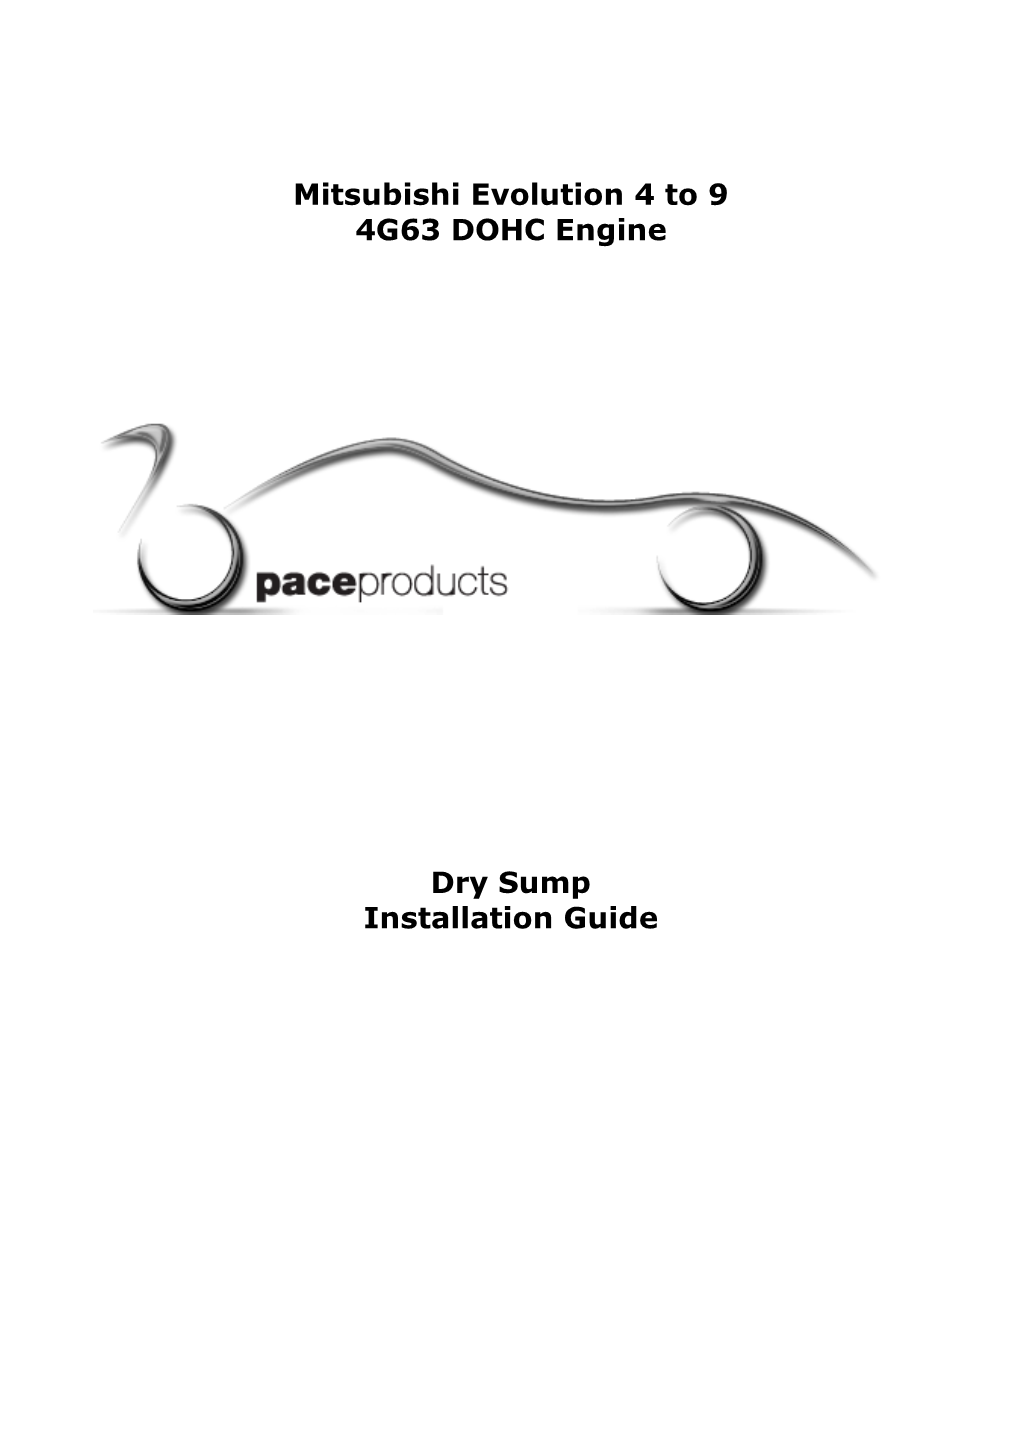 Mitsubishi Evolution 4 to 9 4G63 DOHC Engine Dry Sump Installation Guide